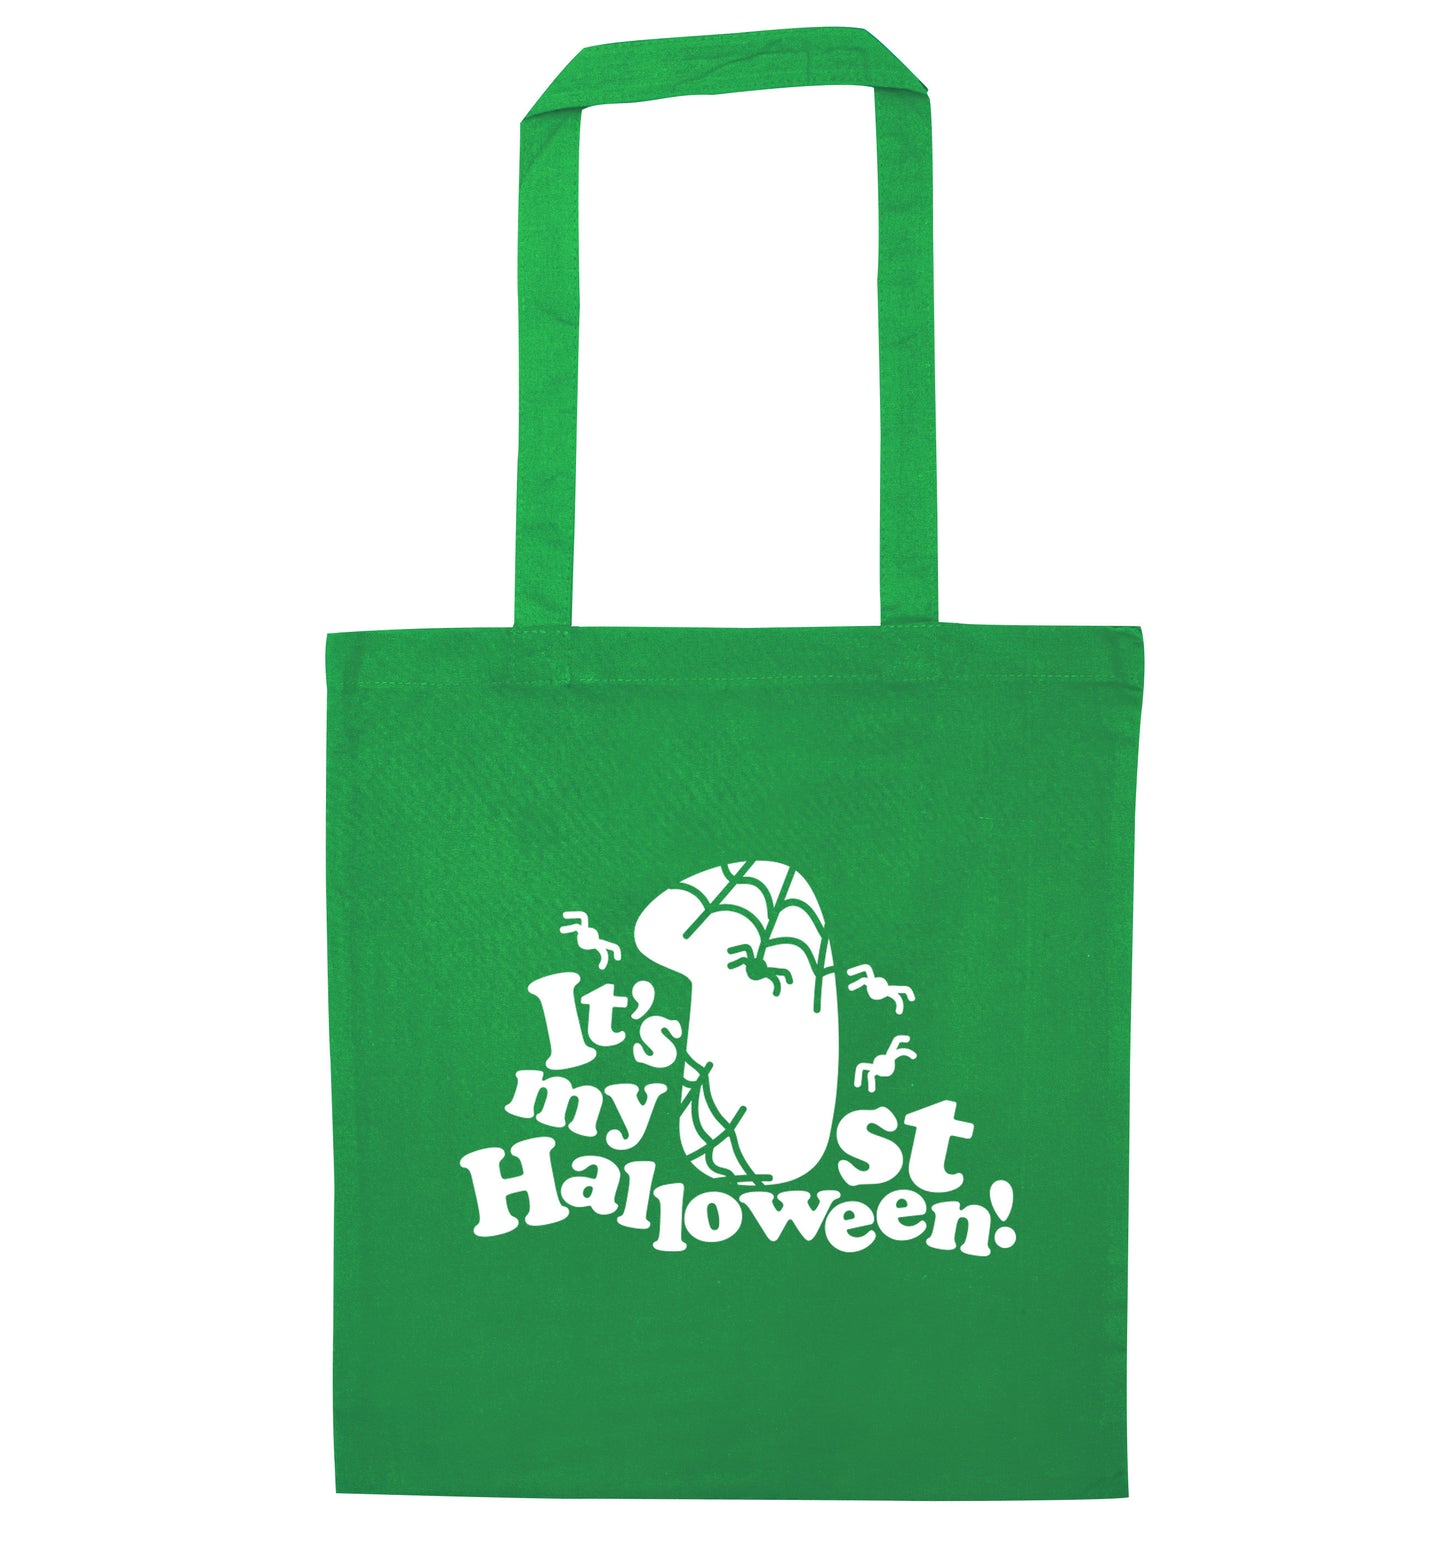 1st Halloween green tote bag